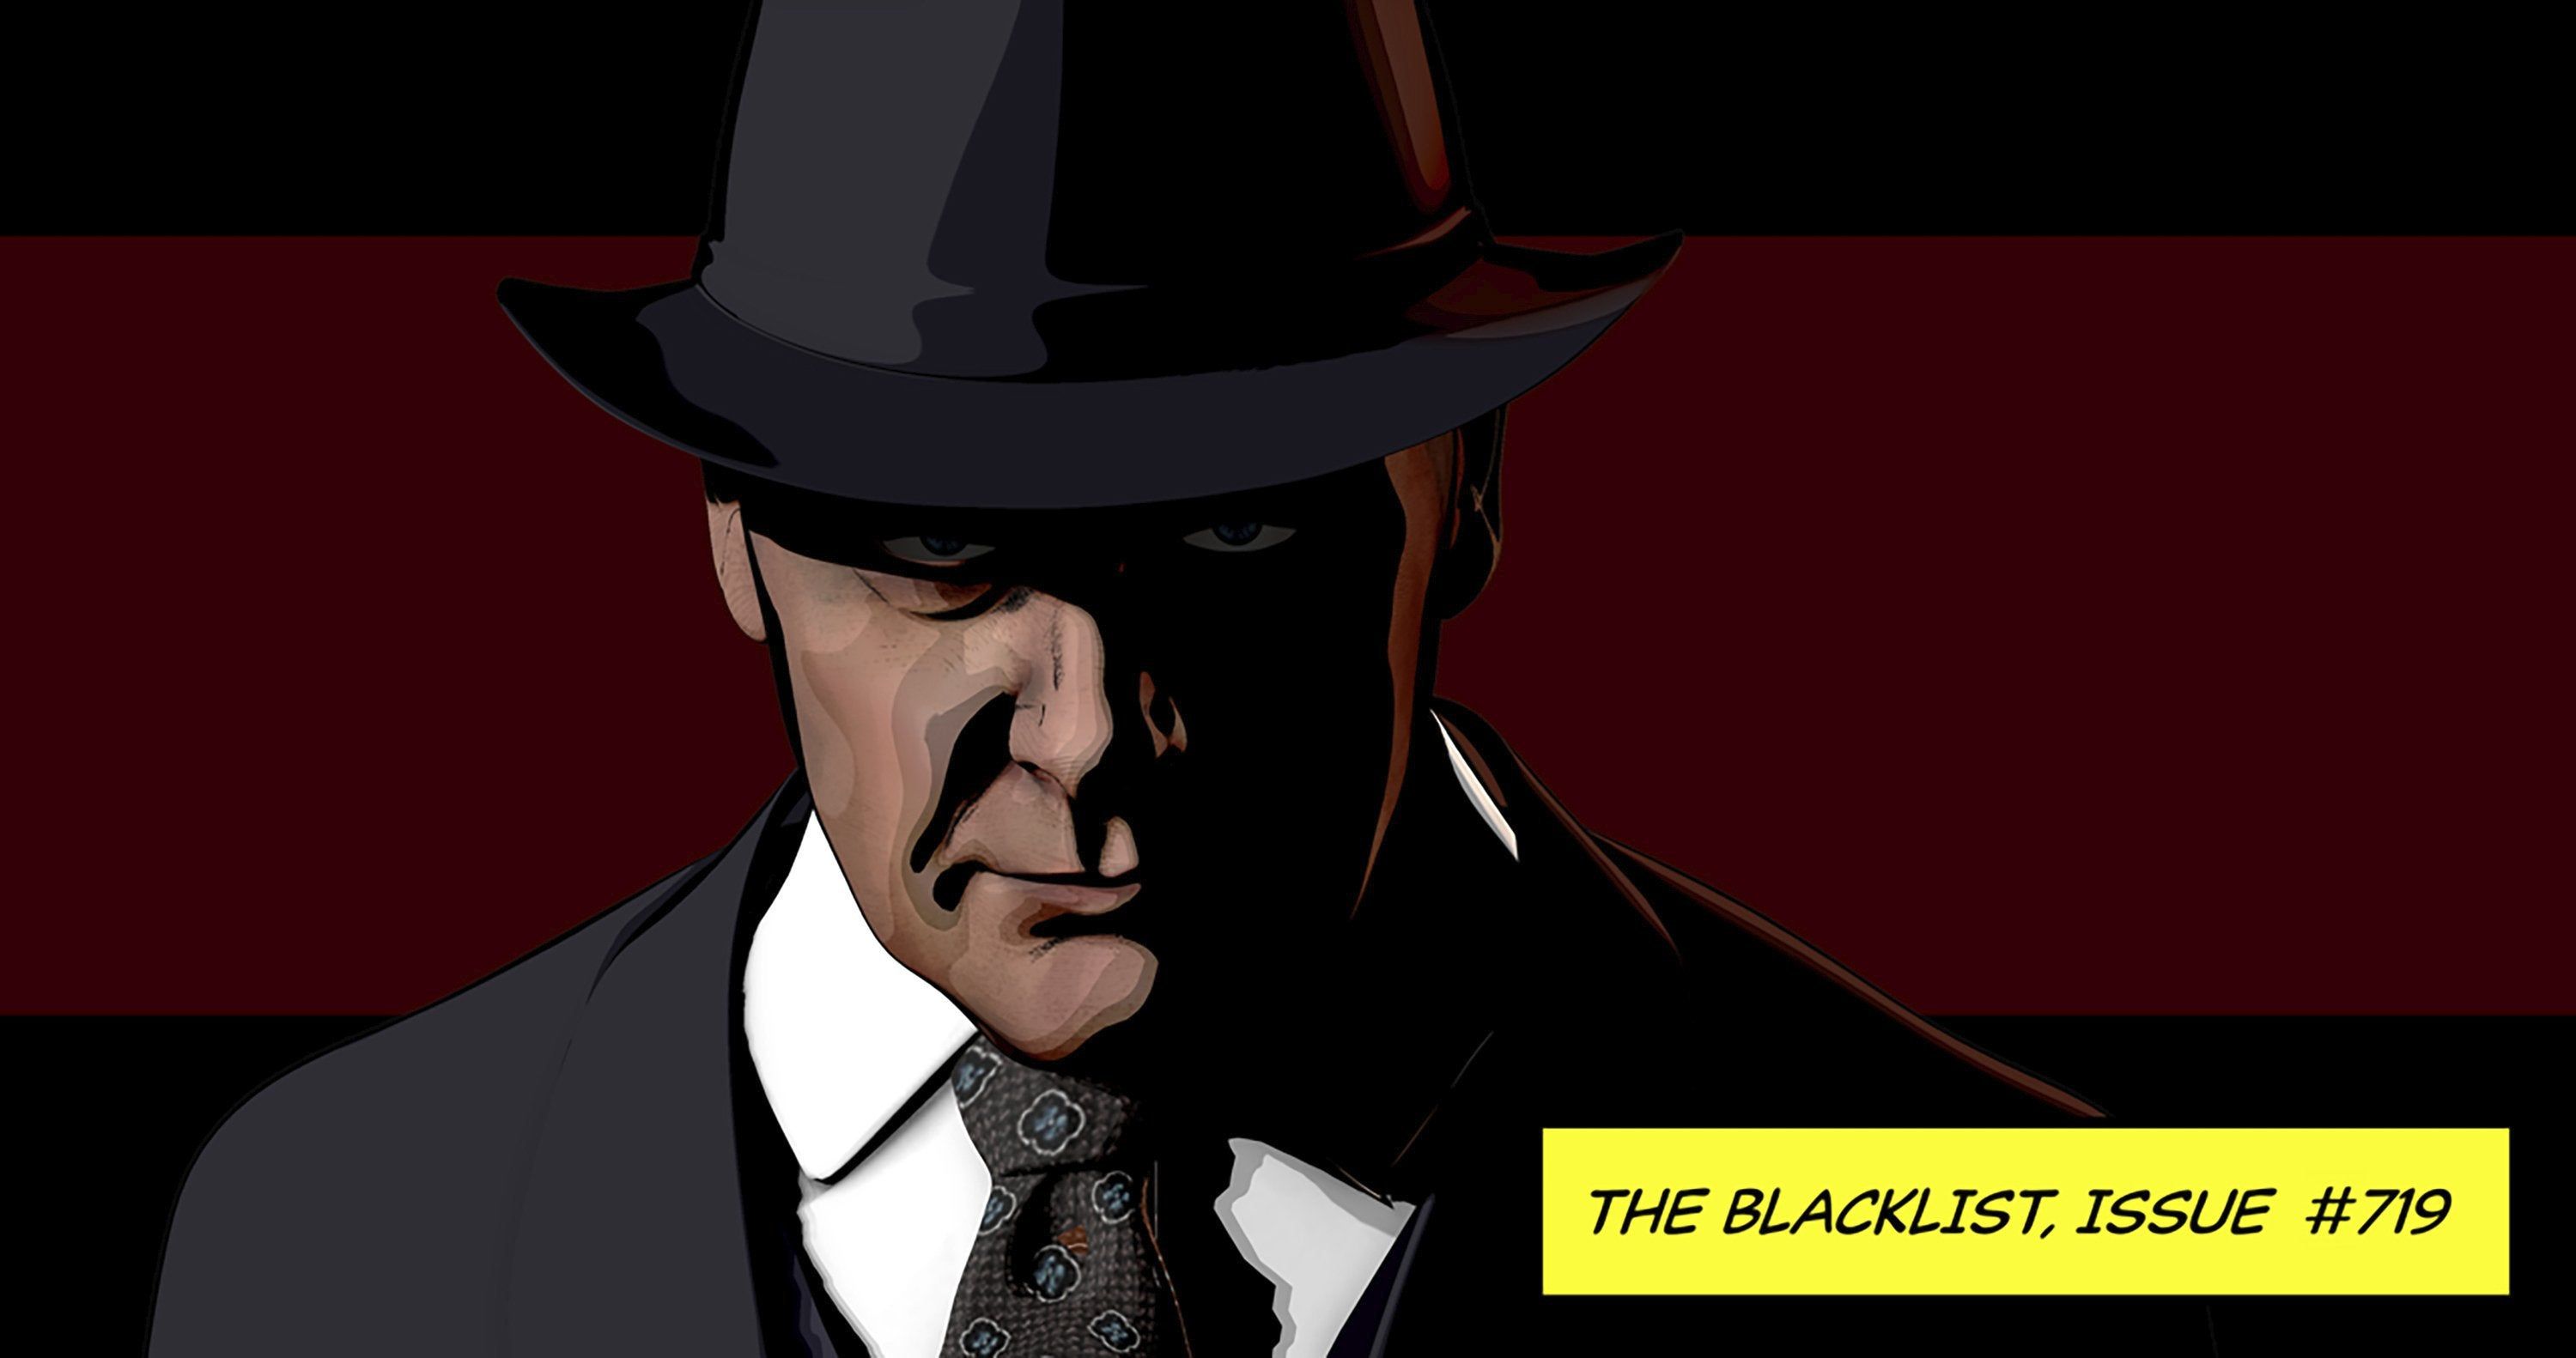 the blacklist season 3 free online